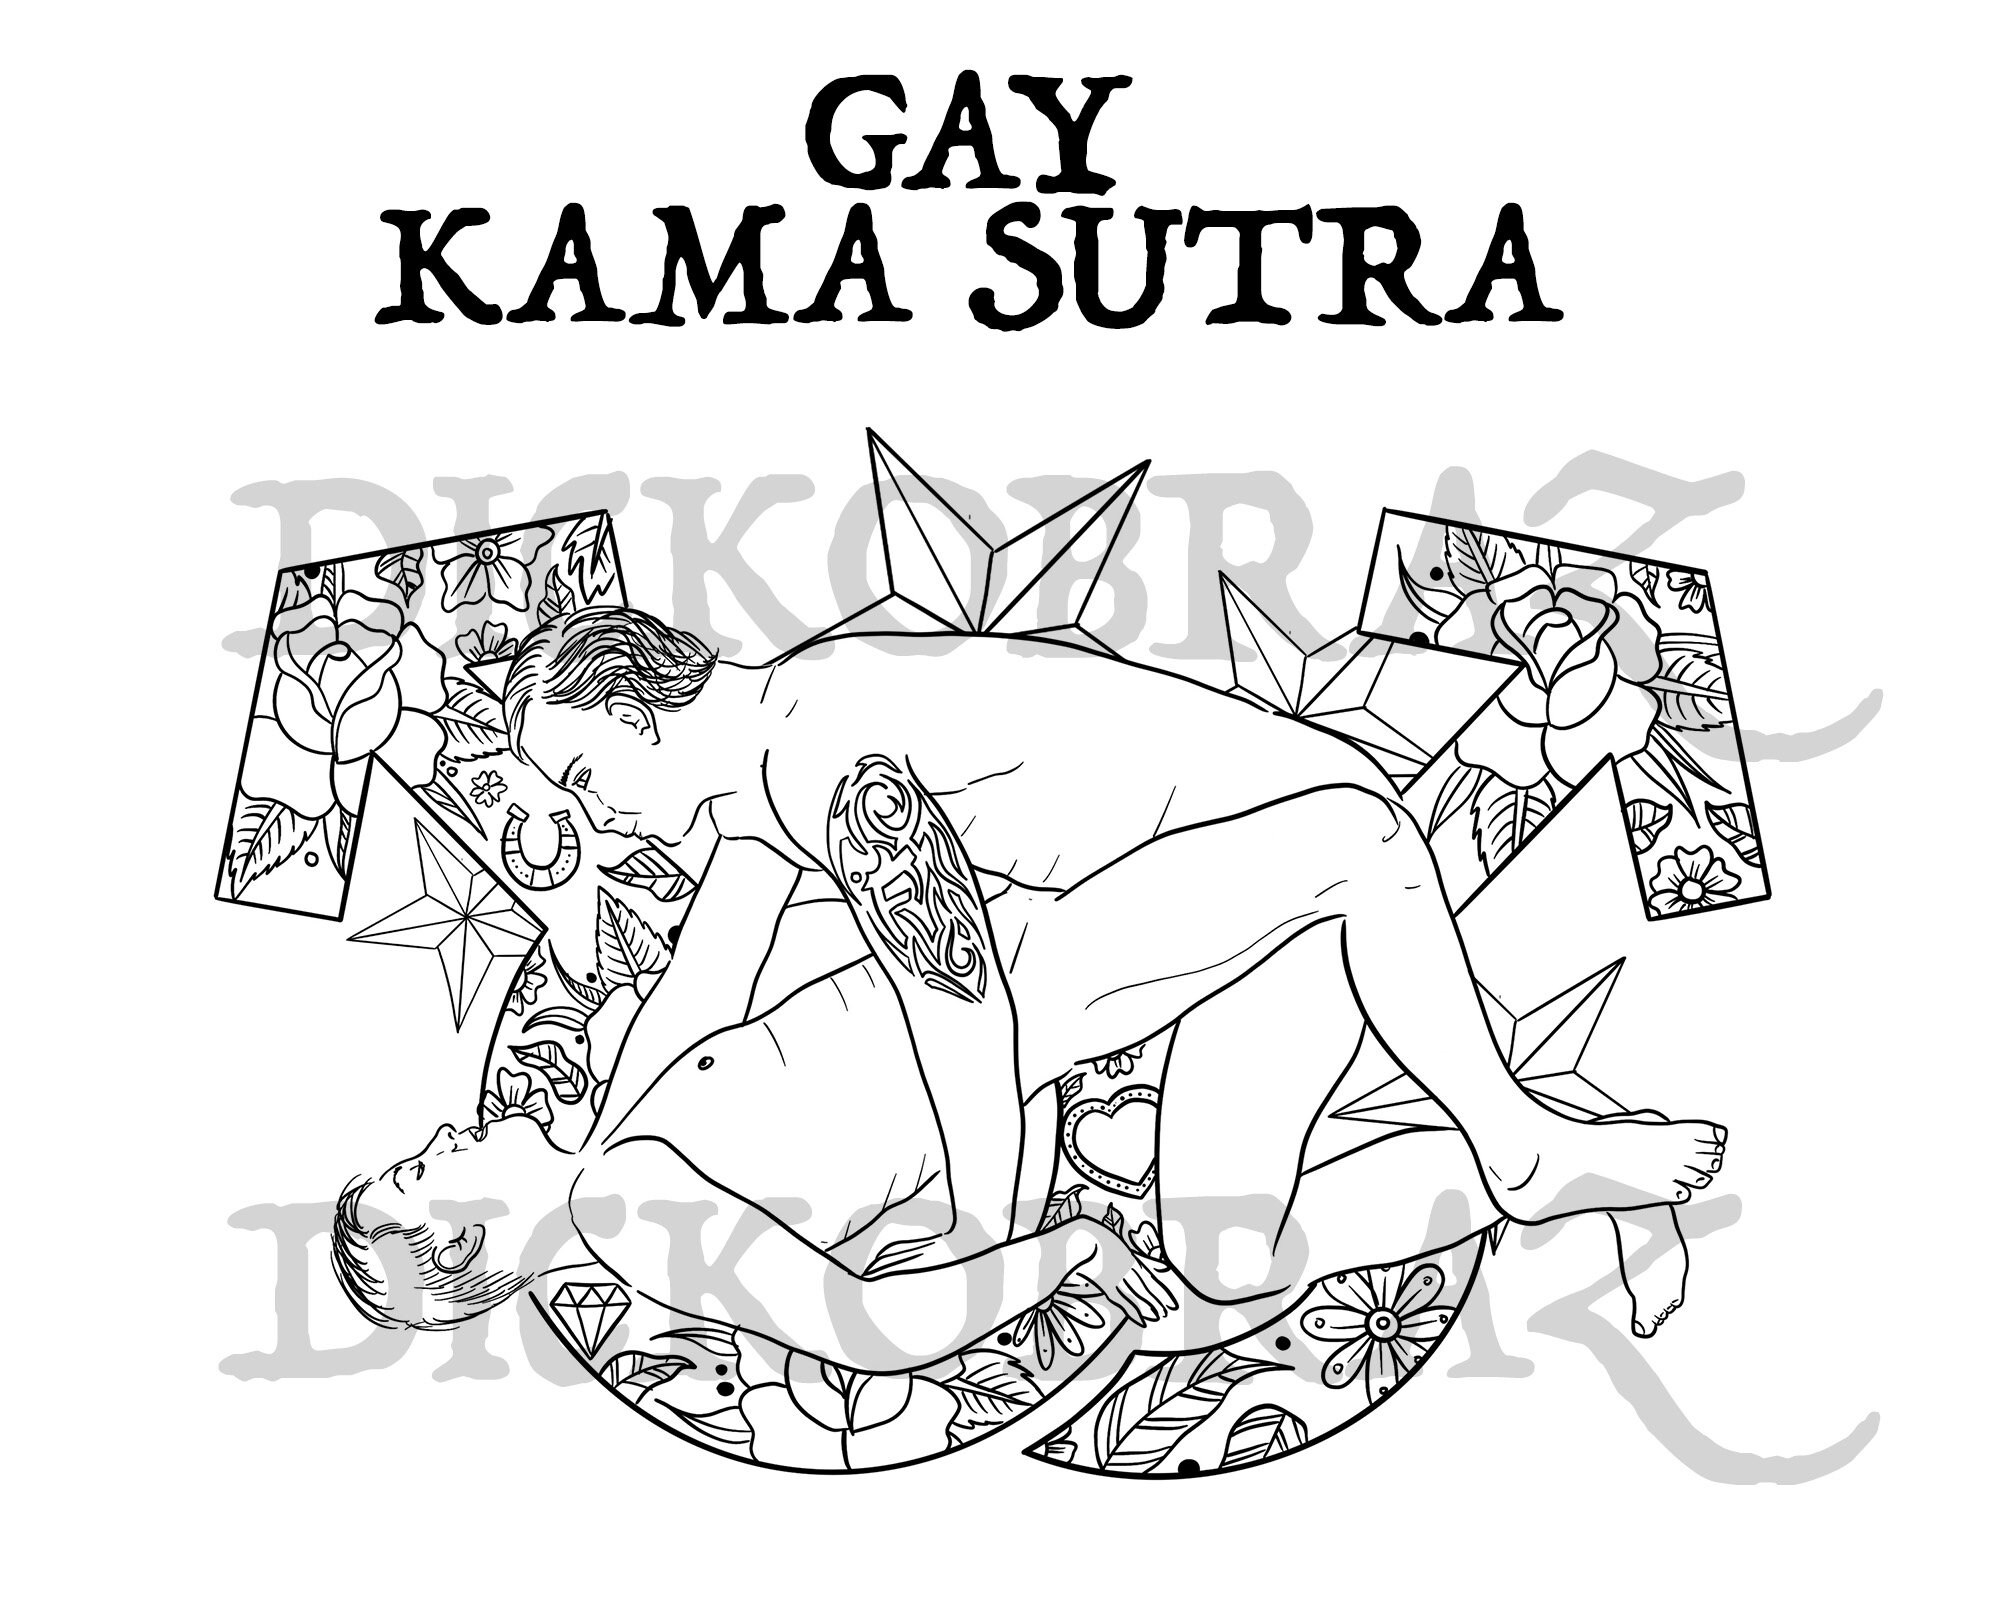 Gay karma sutra threesome